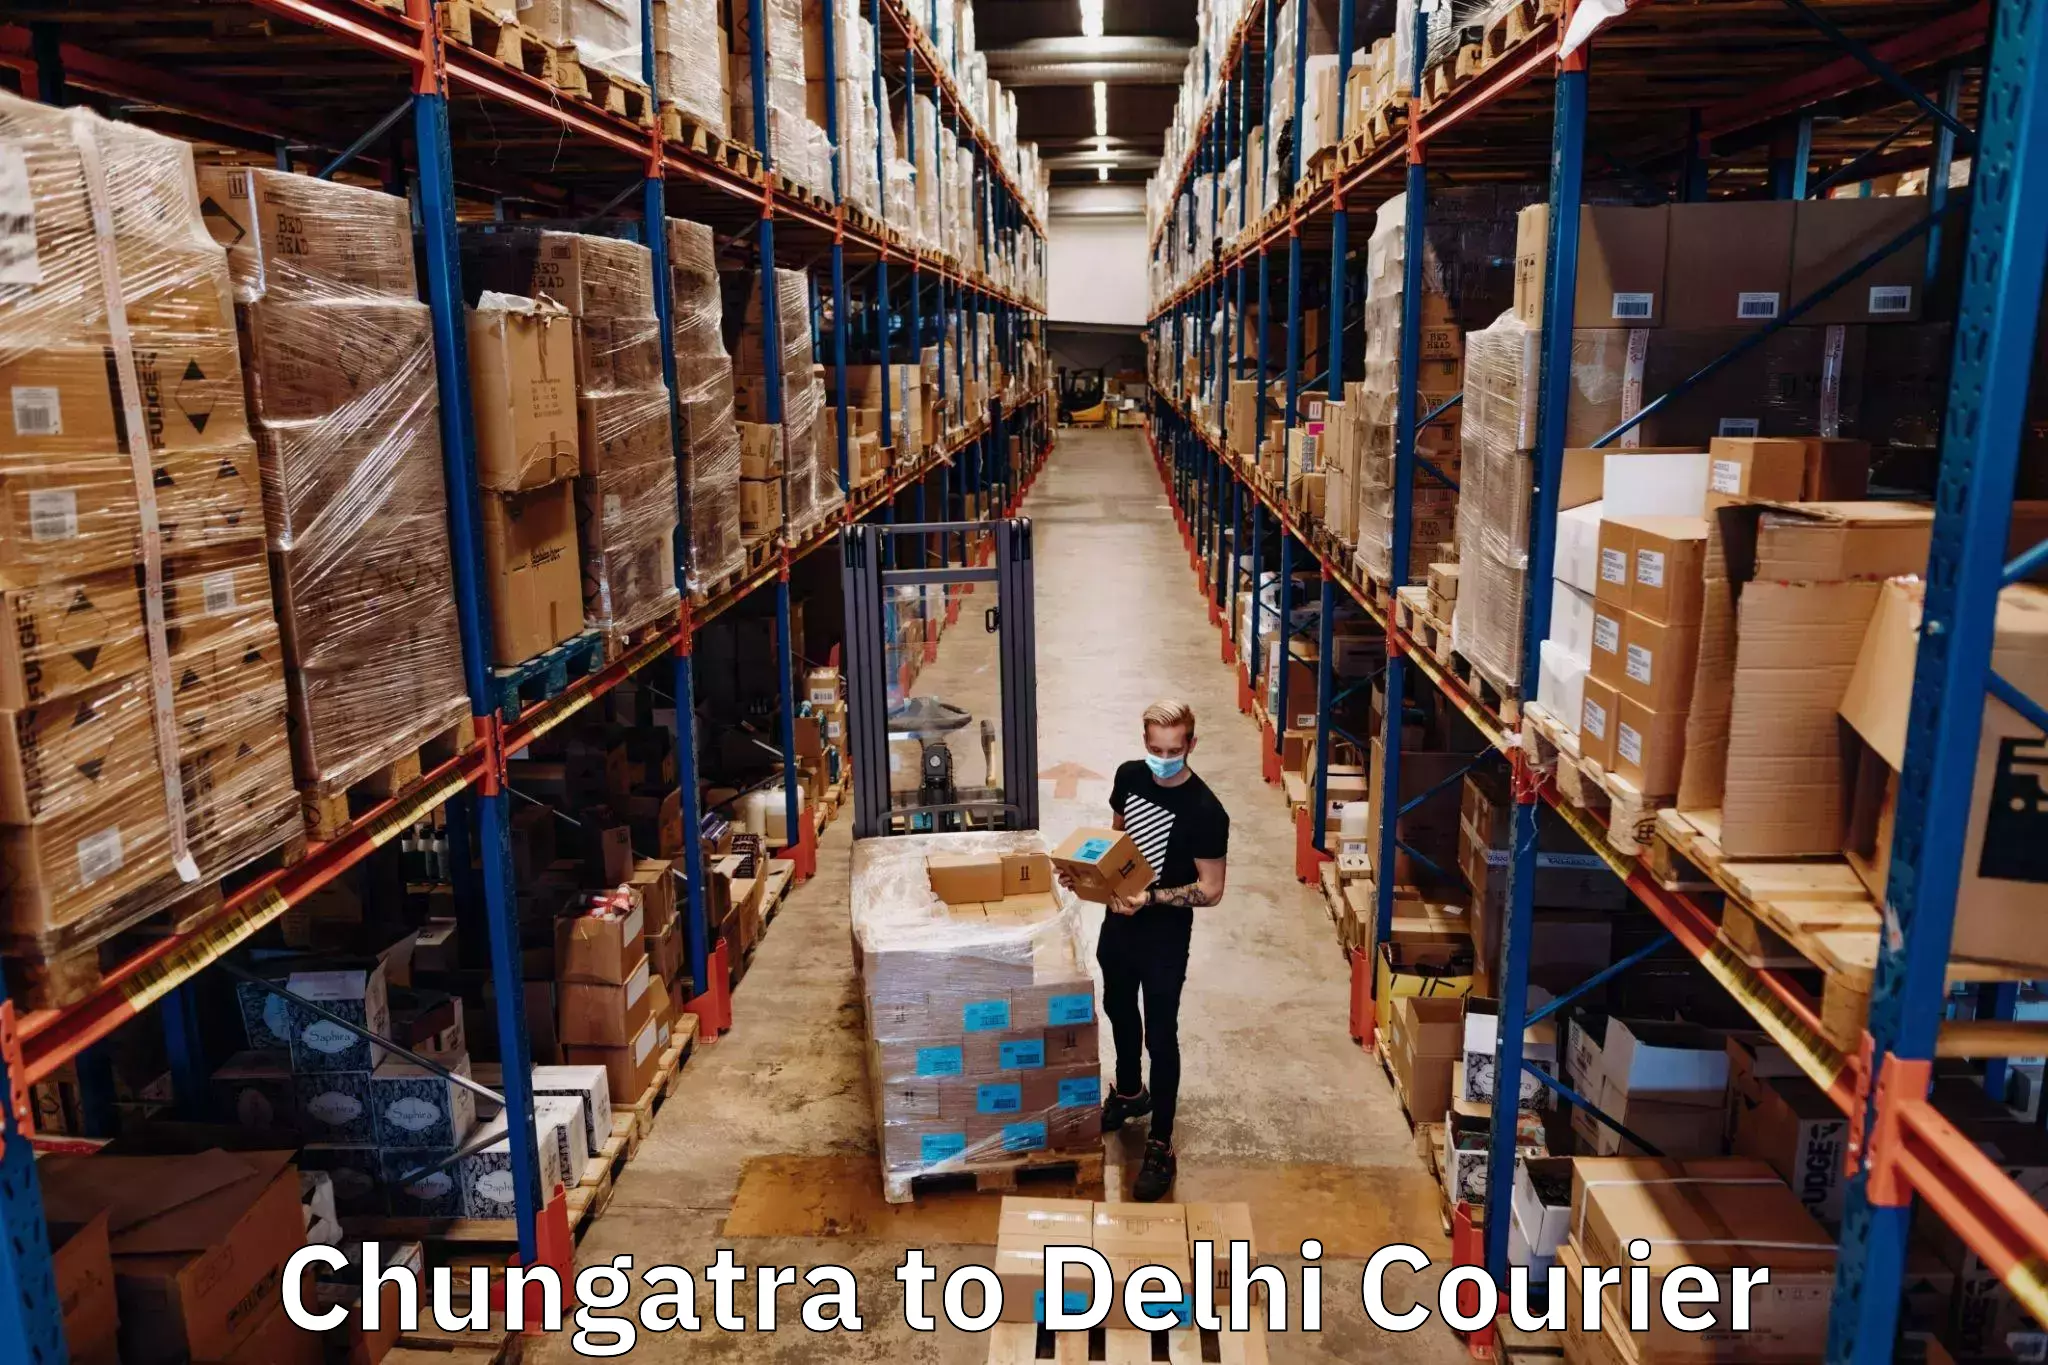 On-call courier service Chungatra to Delhi